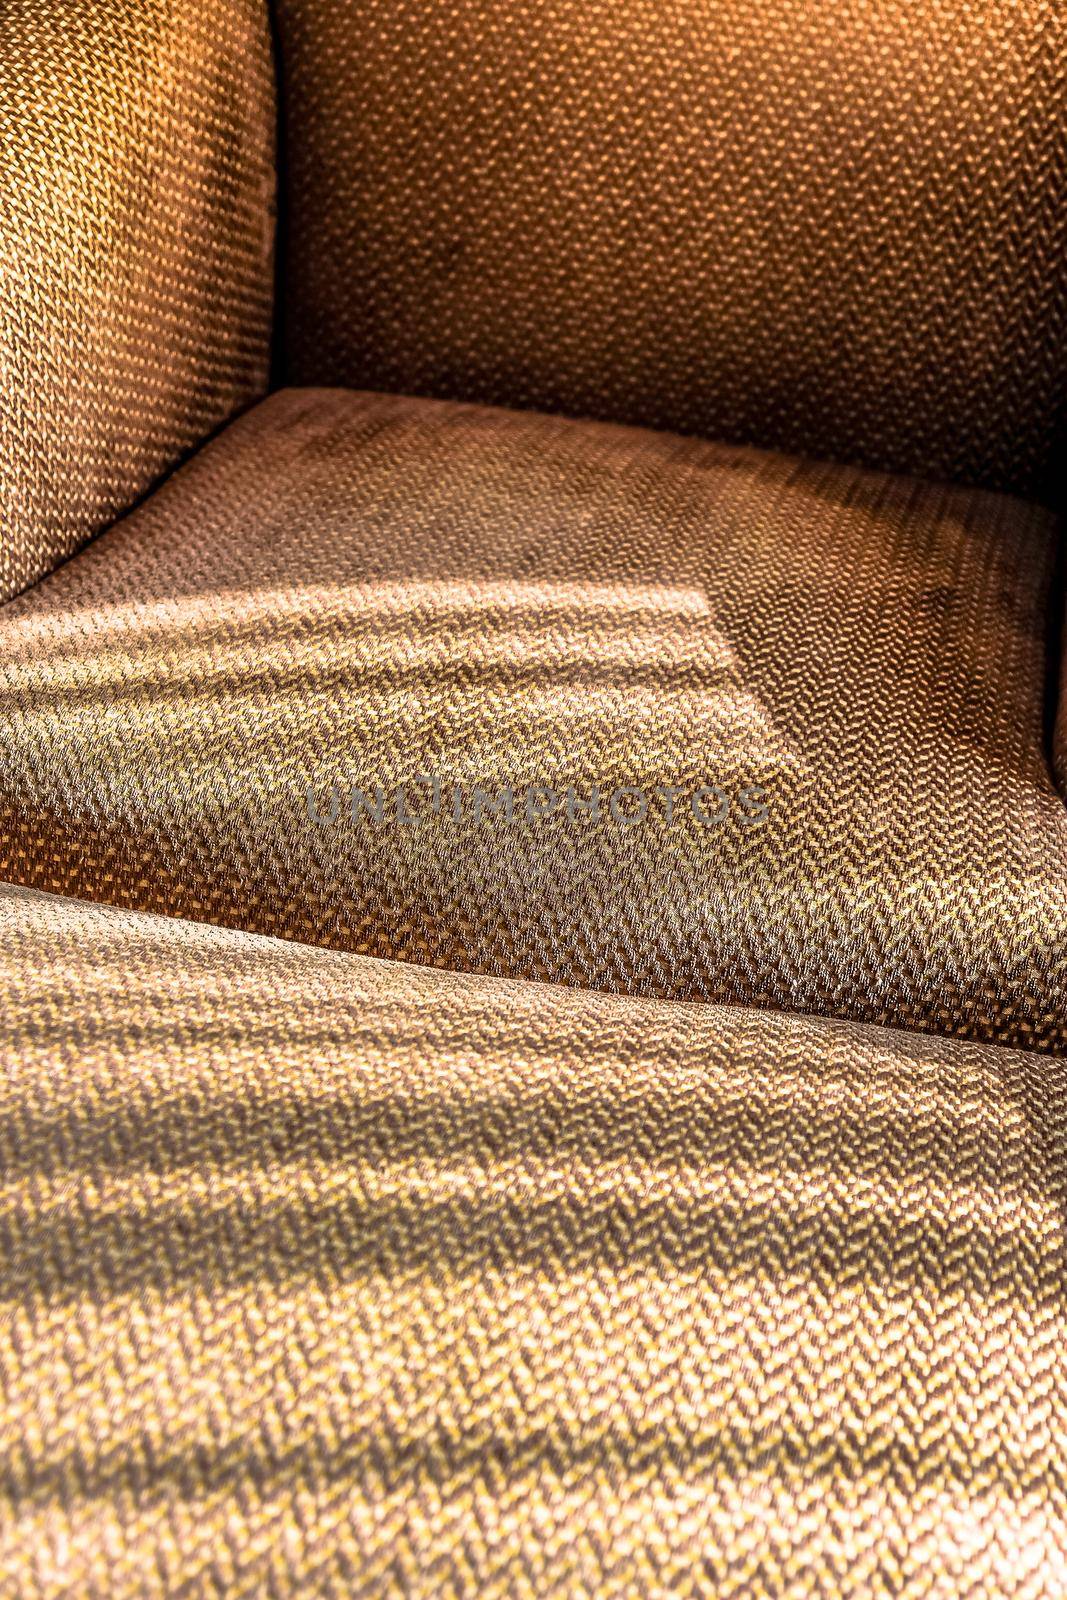 detail image of cushion on sofa, luxury living room